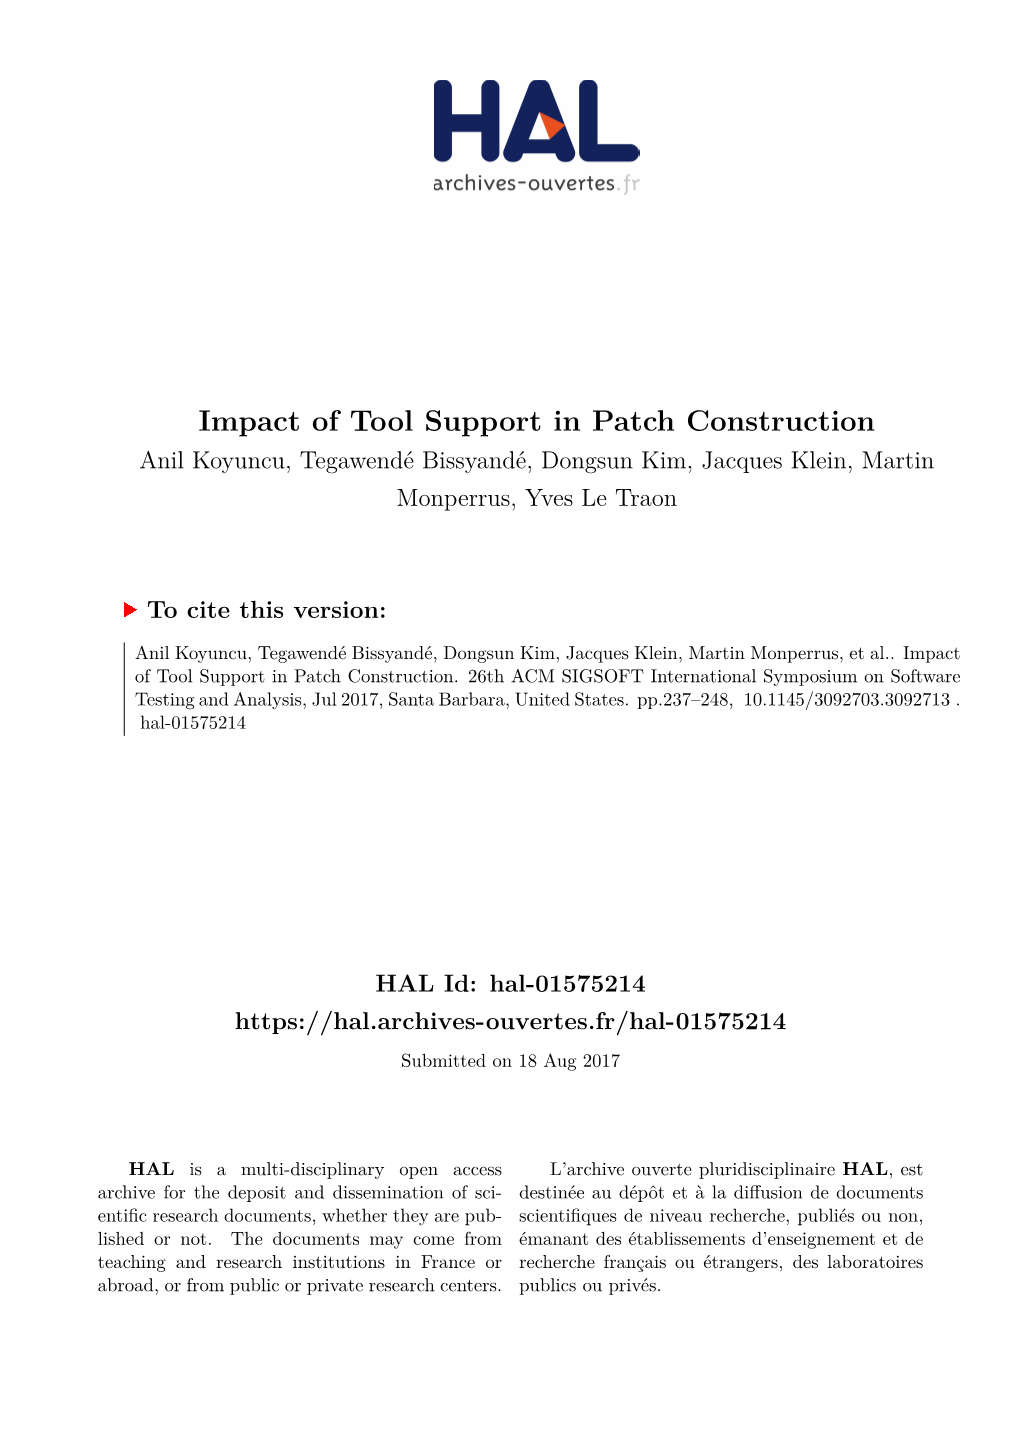 Impact of Tool Support in Patch Construction Anil Koyuncu, Tegawendé Bissyandé, Dongsun Kim, Jacques Klein, Martin Monperrus, Yves Le Traon